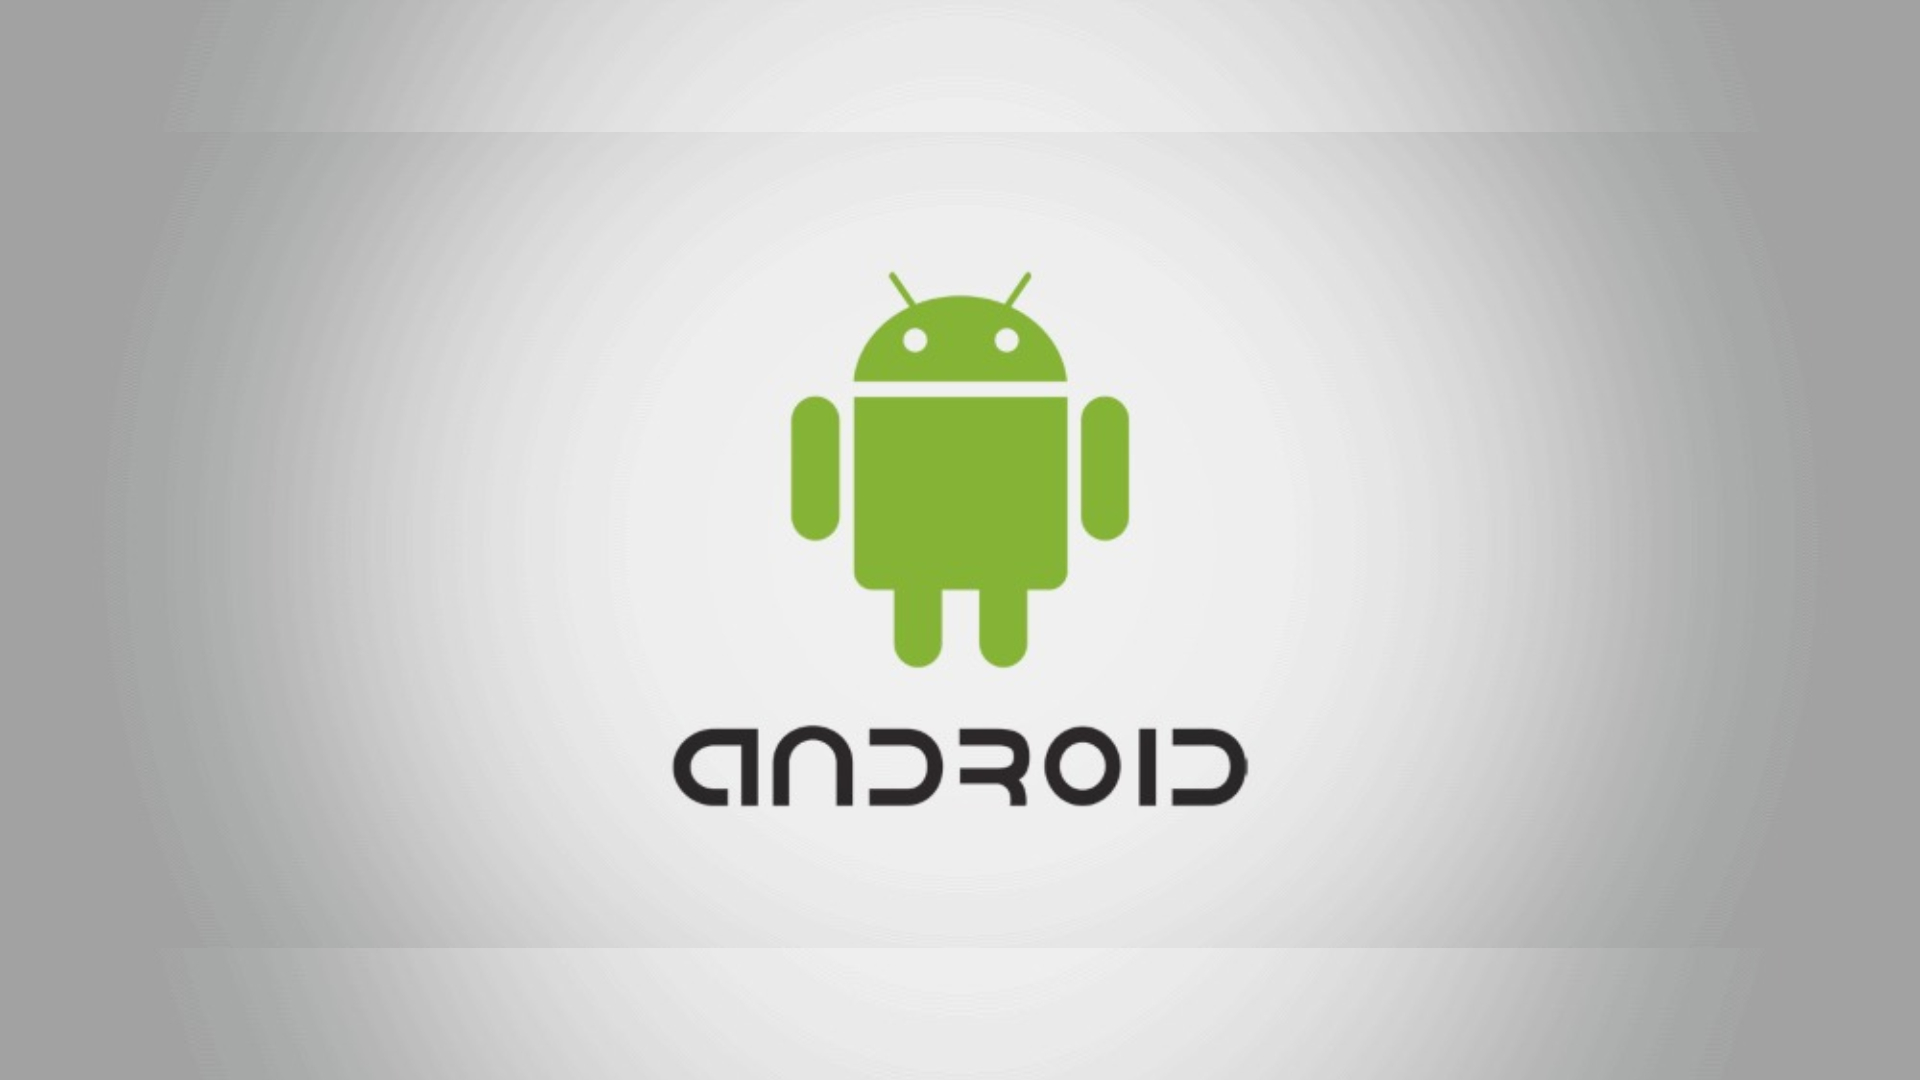 Android года выпуска. Андроид. Логотип Android. Андро. ОС андроид логотип.